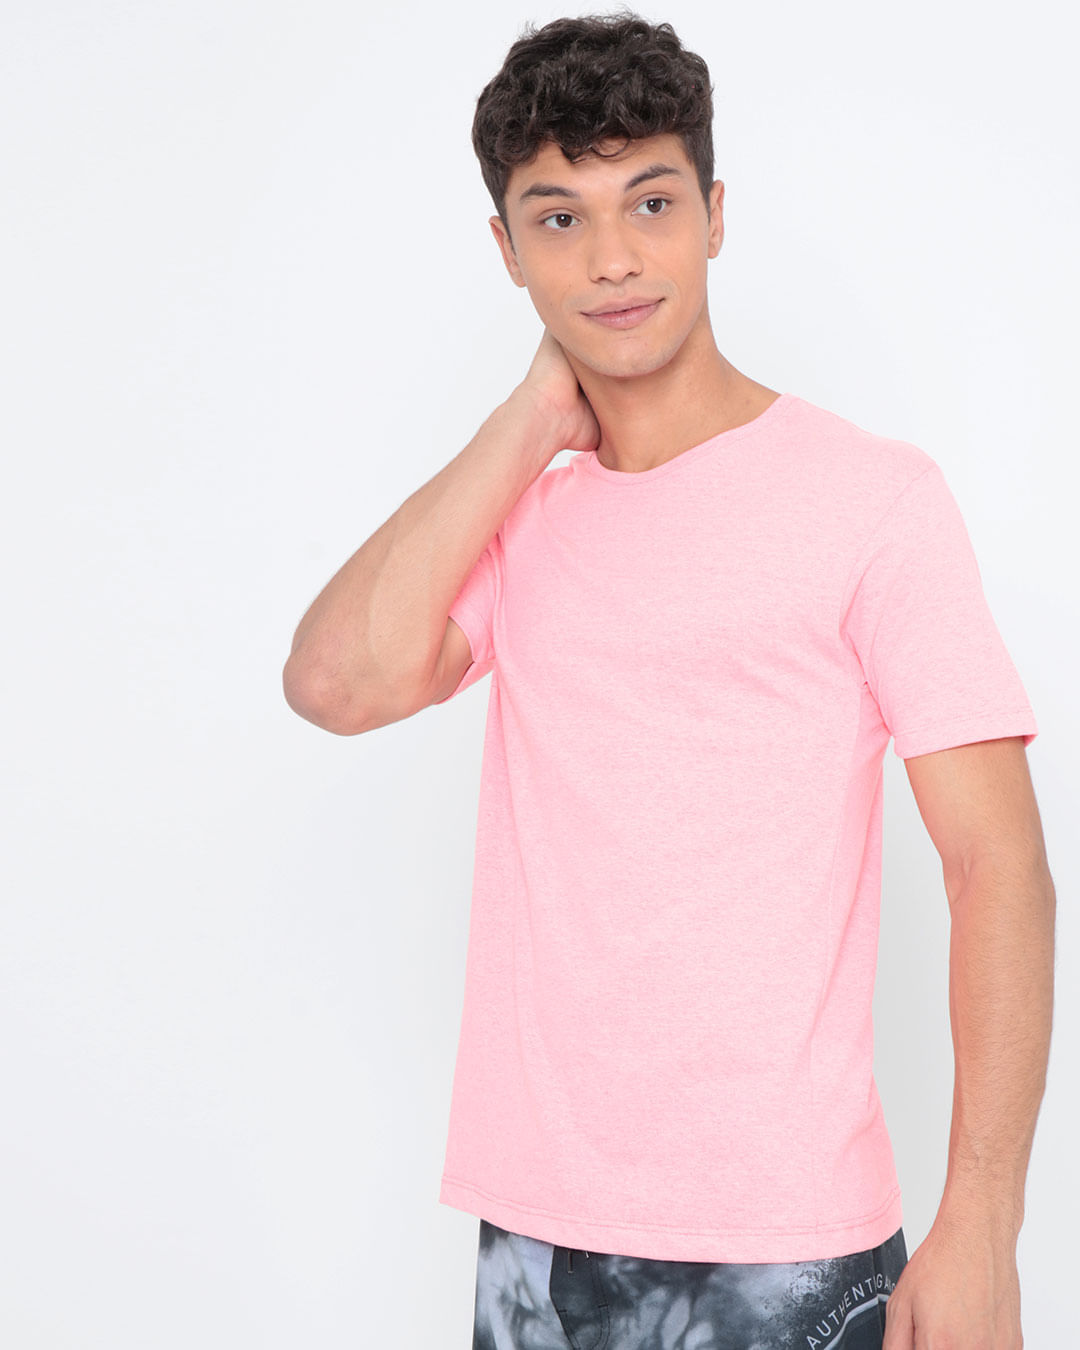 Camiseta-Basica-Lisa-Neon-Rosa